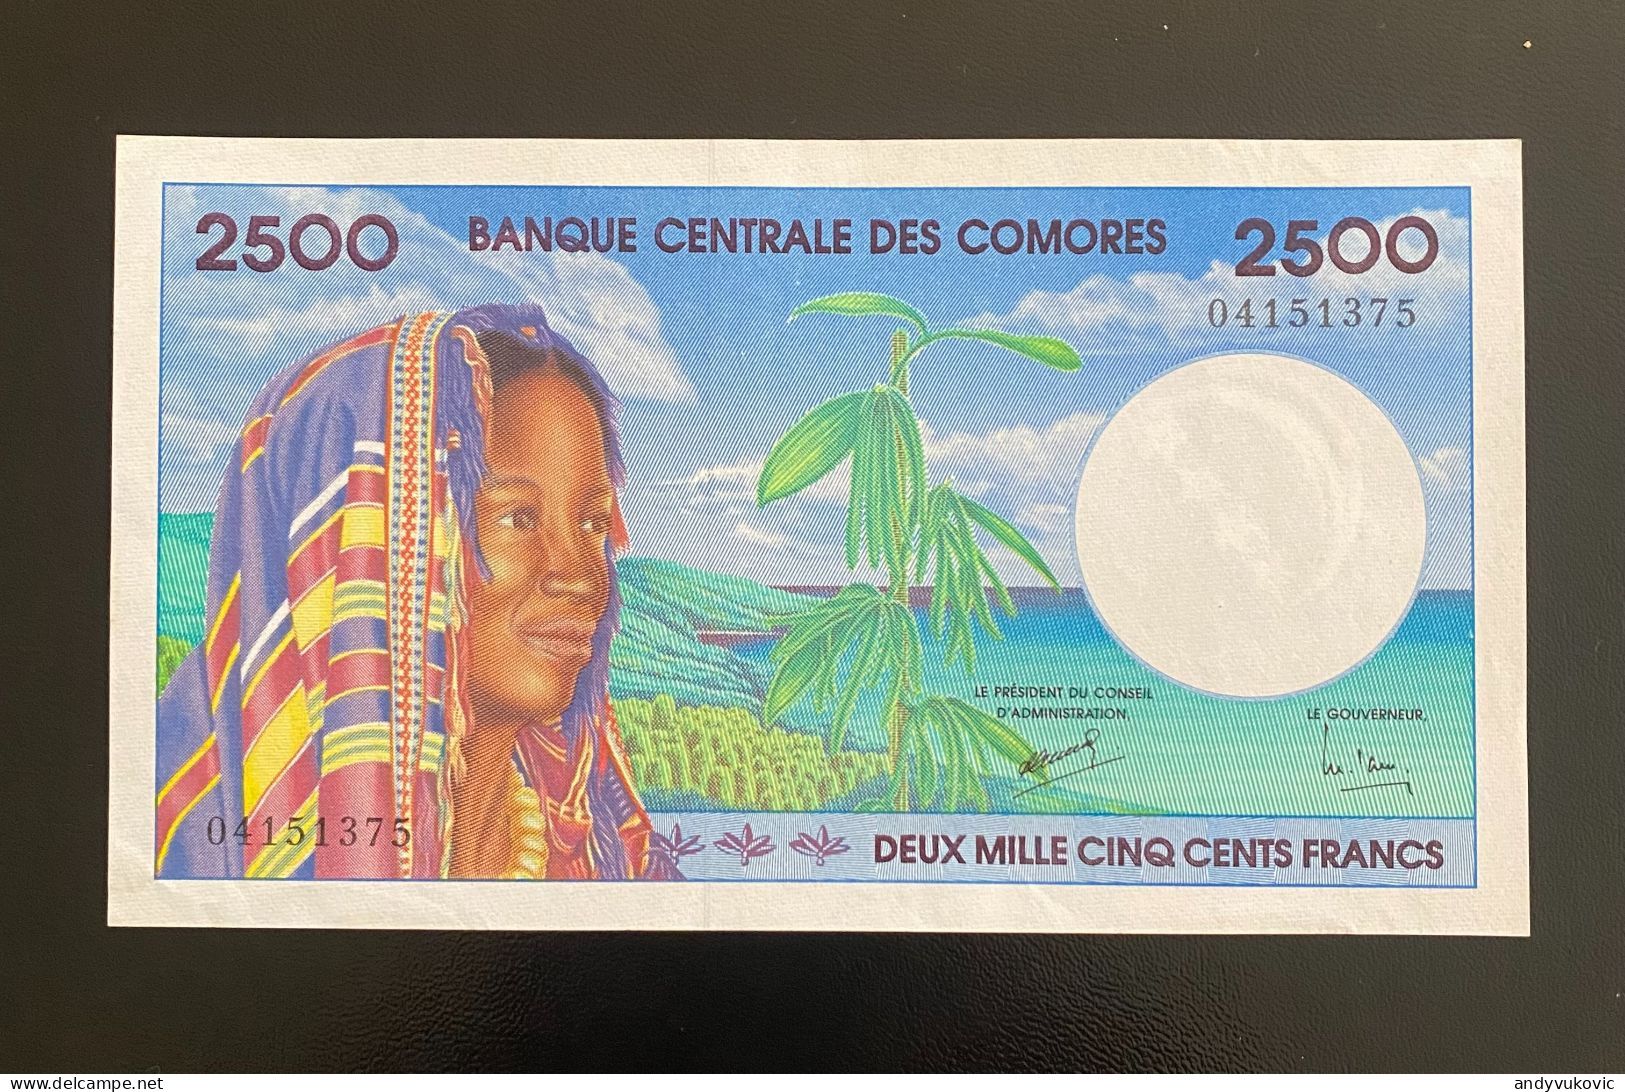 COMOROS 2500 FRANCS, UNC, P13 - Comoros